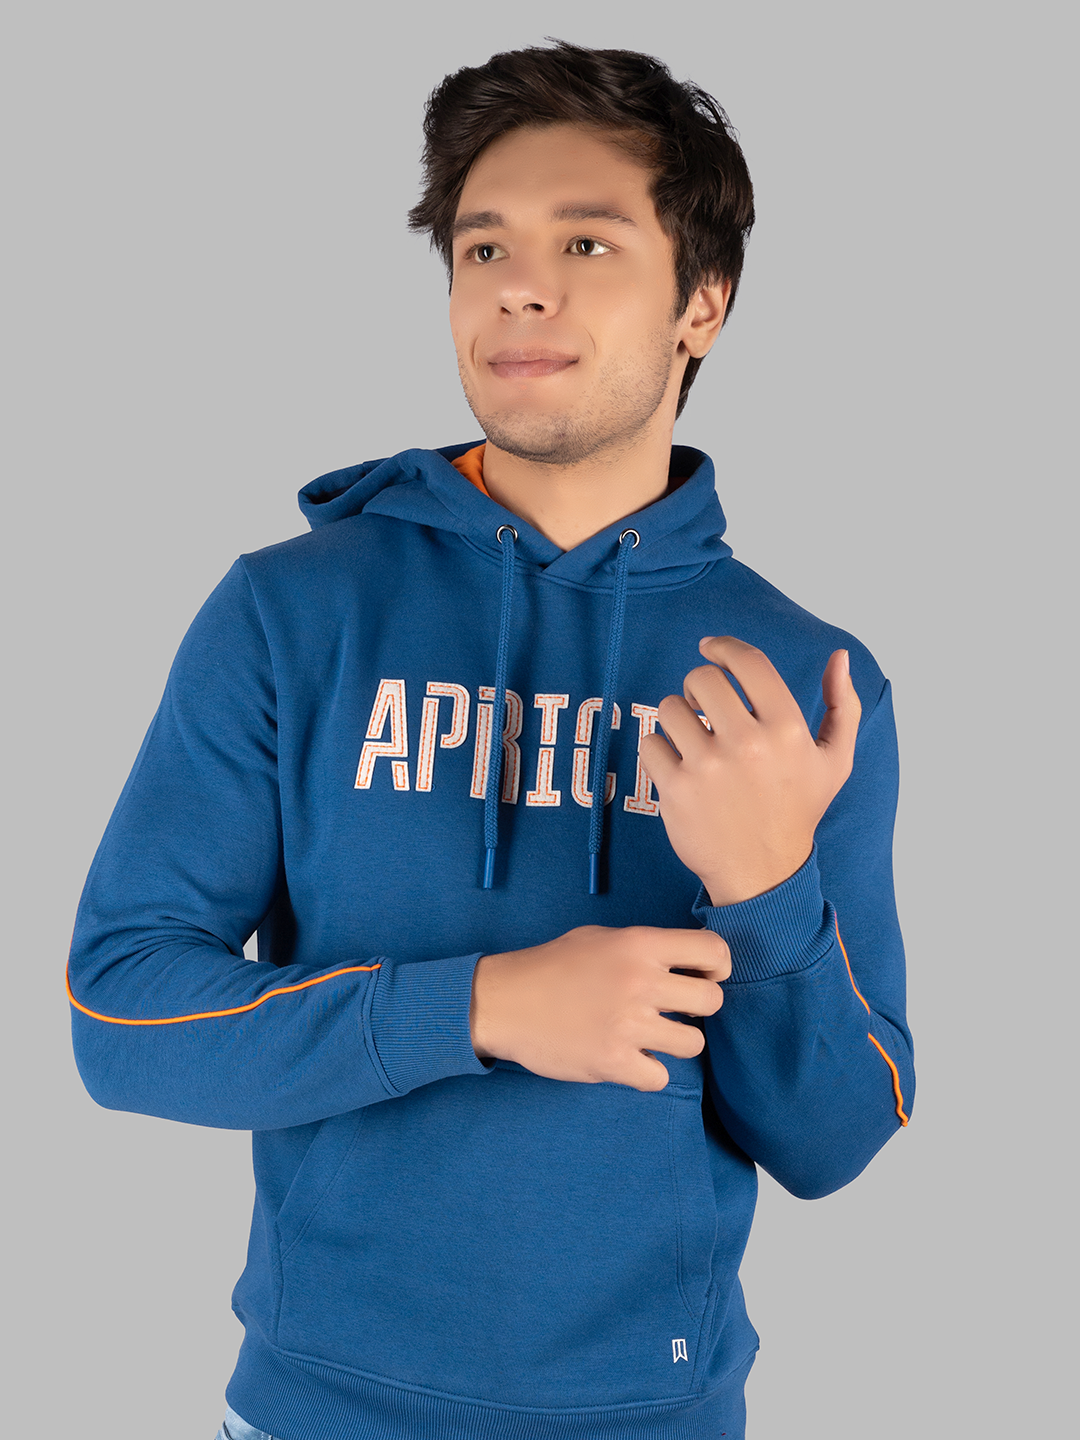 Men's Zipper Blue Hoodie Full Sleeve Cotton Sweatshirt